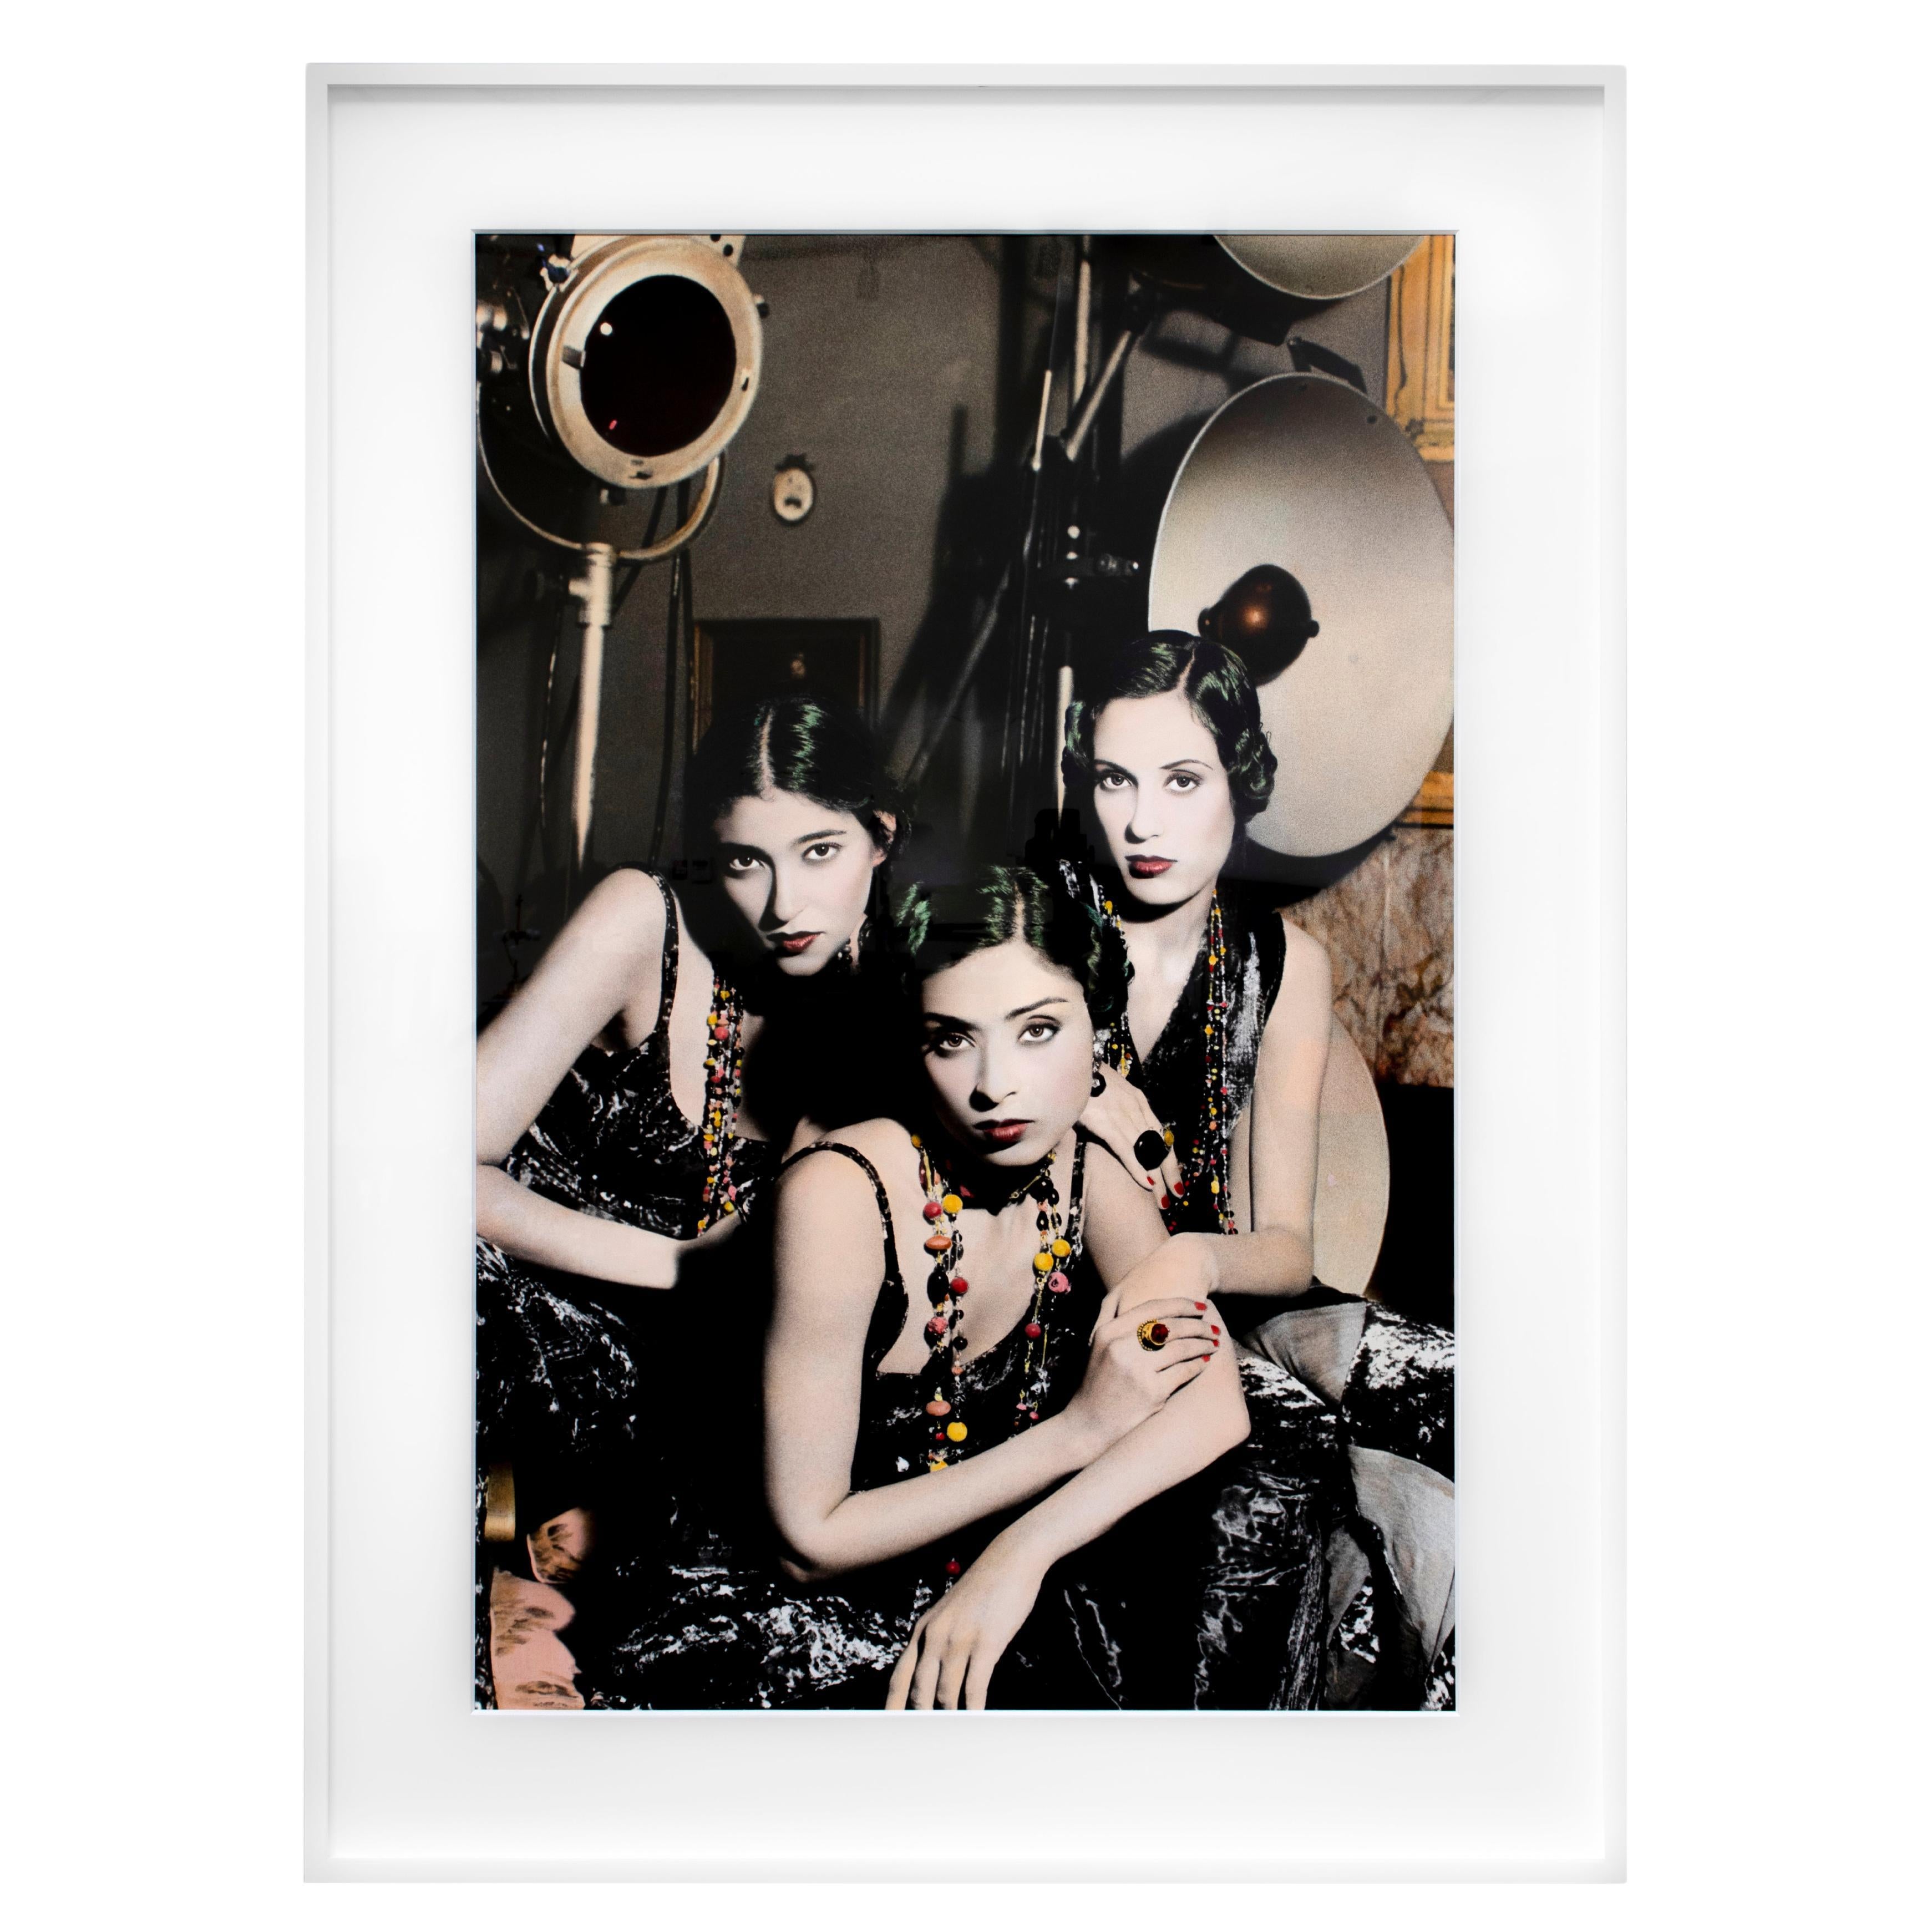 Three Girls in Studio, Cairo, édition limitée 2/3 de Youssef Nabil